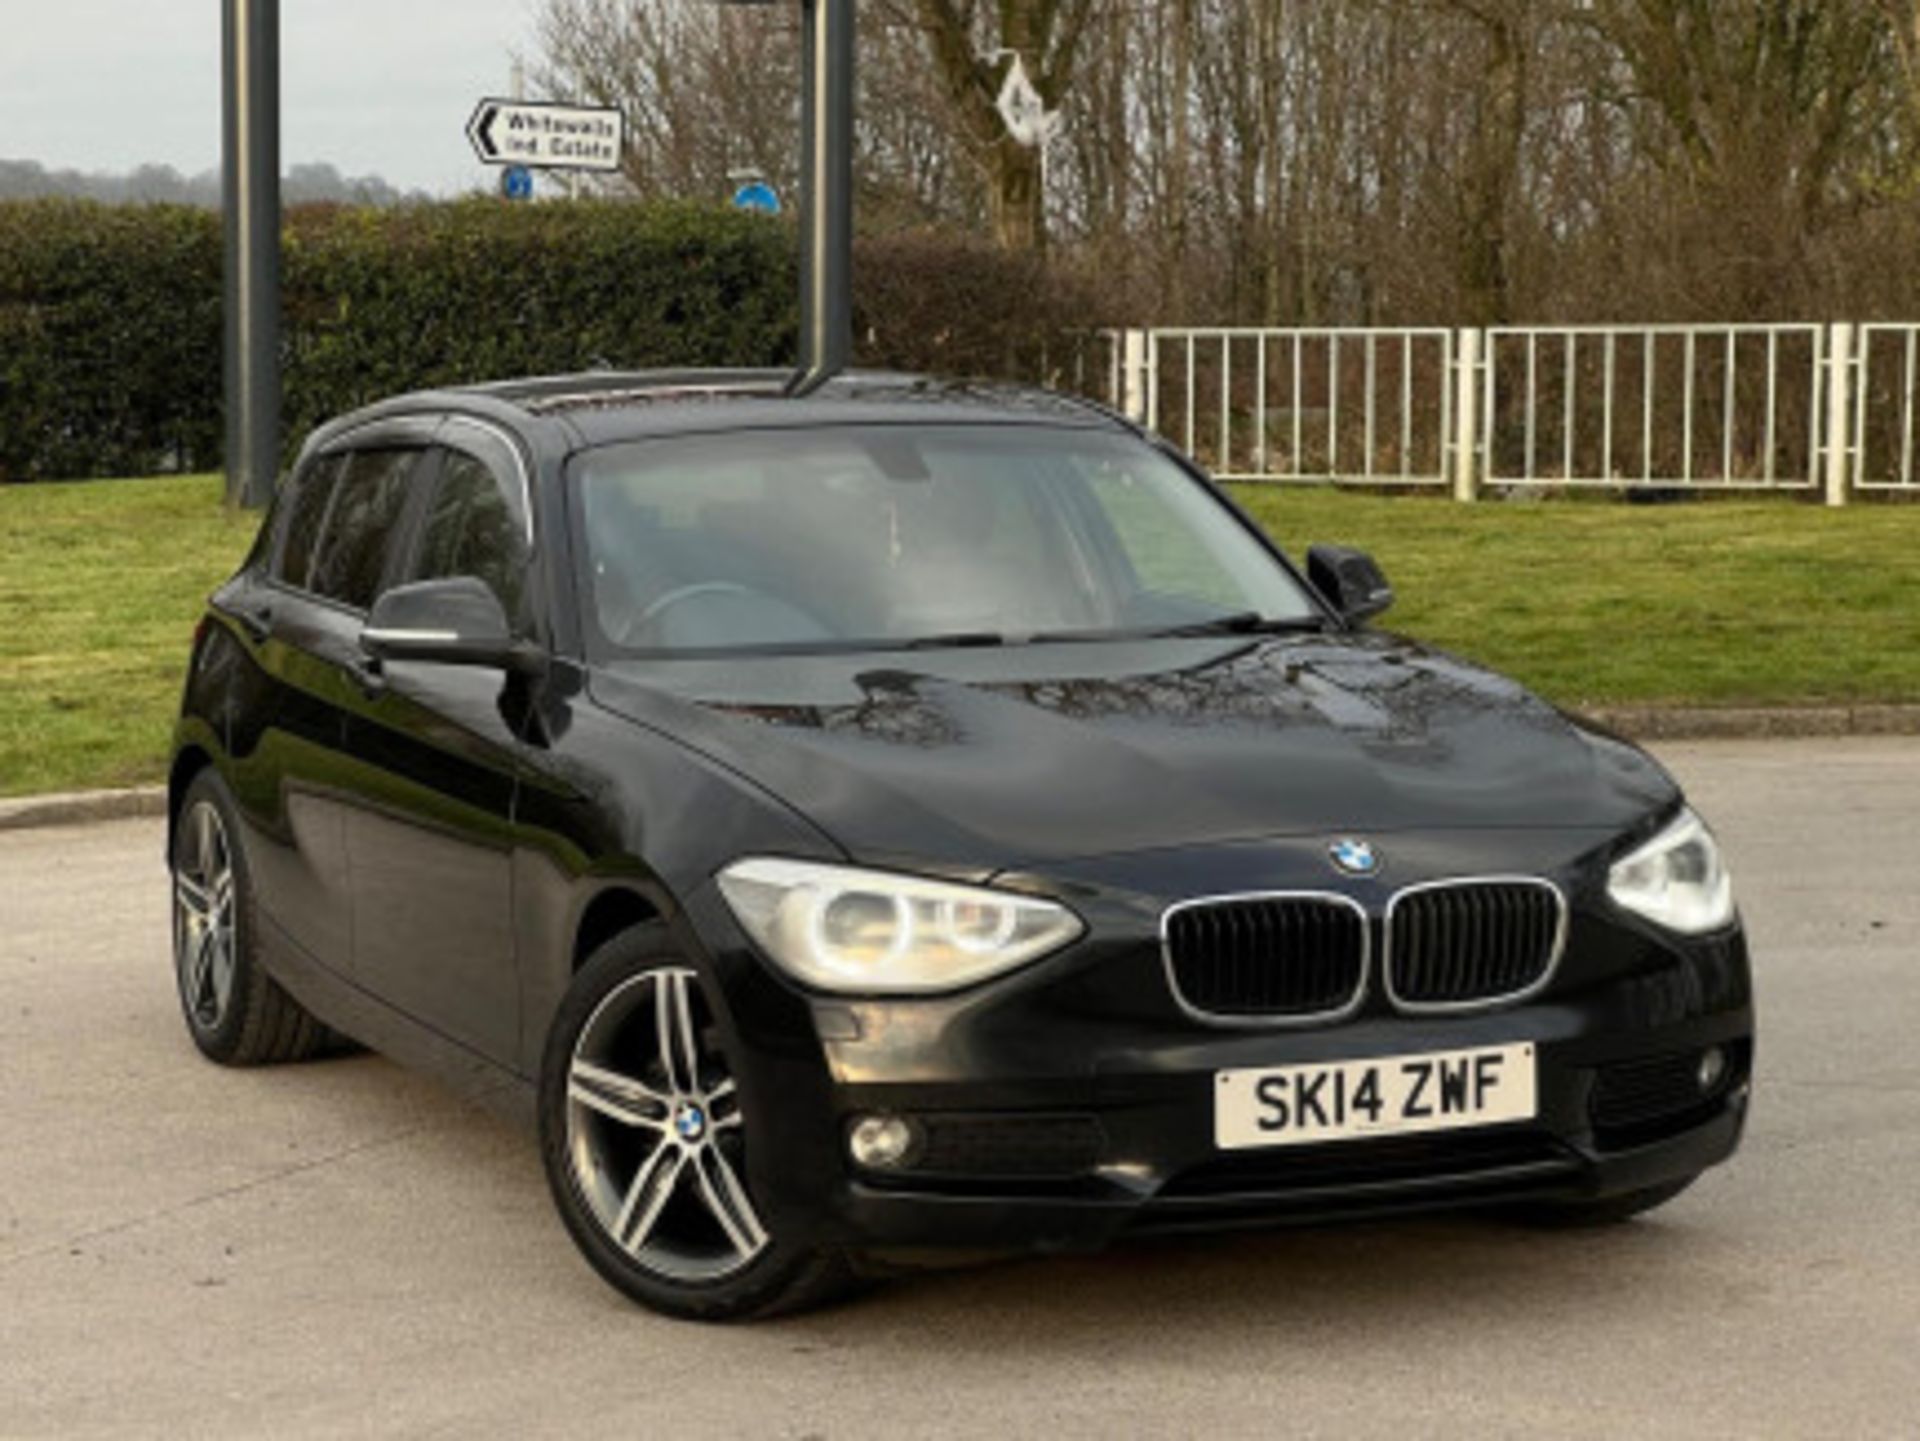 2014 BMW 1 SERIES 1.6 116D ED EFFICIENT DYNAMICS BUSINESS 5DR >>--NO VAT ON HAMMER--<< - Image 47 of 119